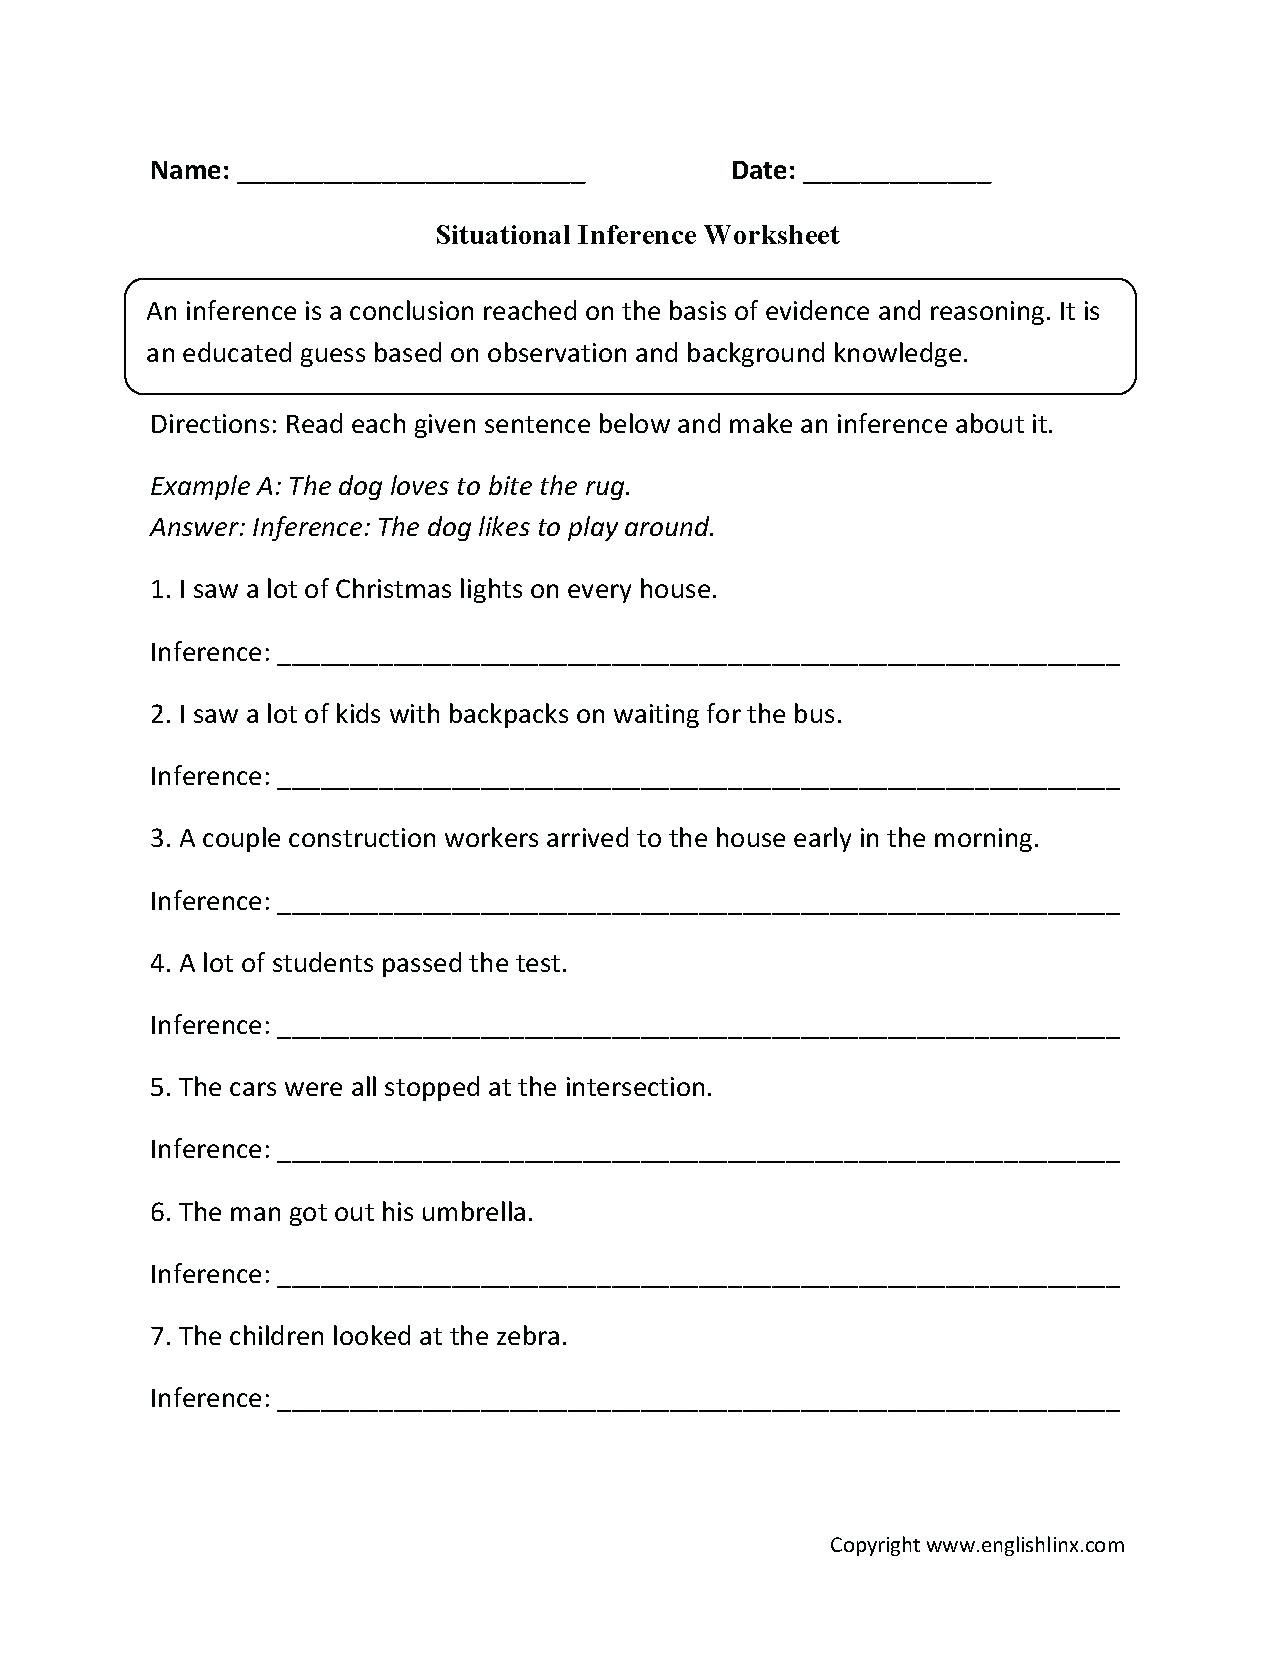 science 5th grade worksheets grade science worksheets states of matter worksheet 5 grade science worksheets lesson plan templates free 5th grade science worksheets free pdf